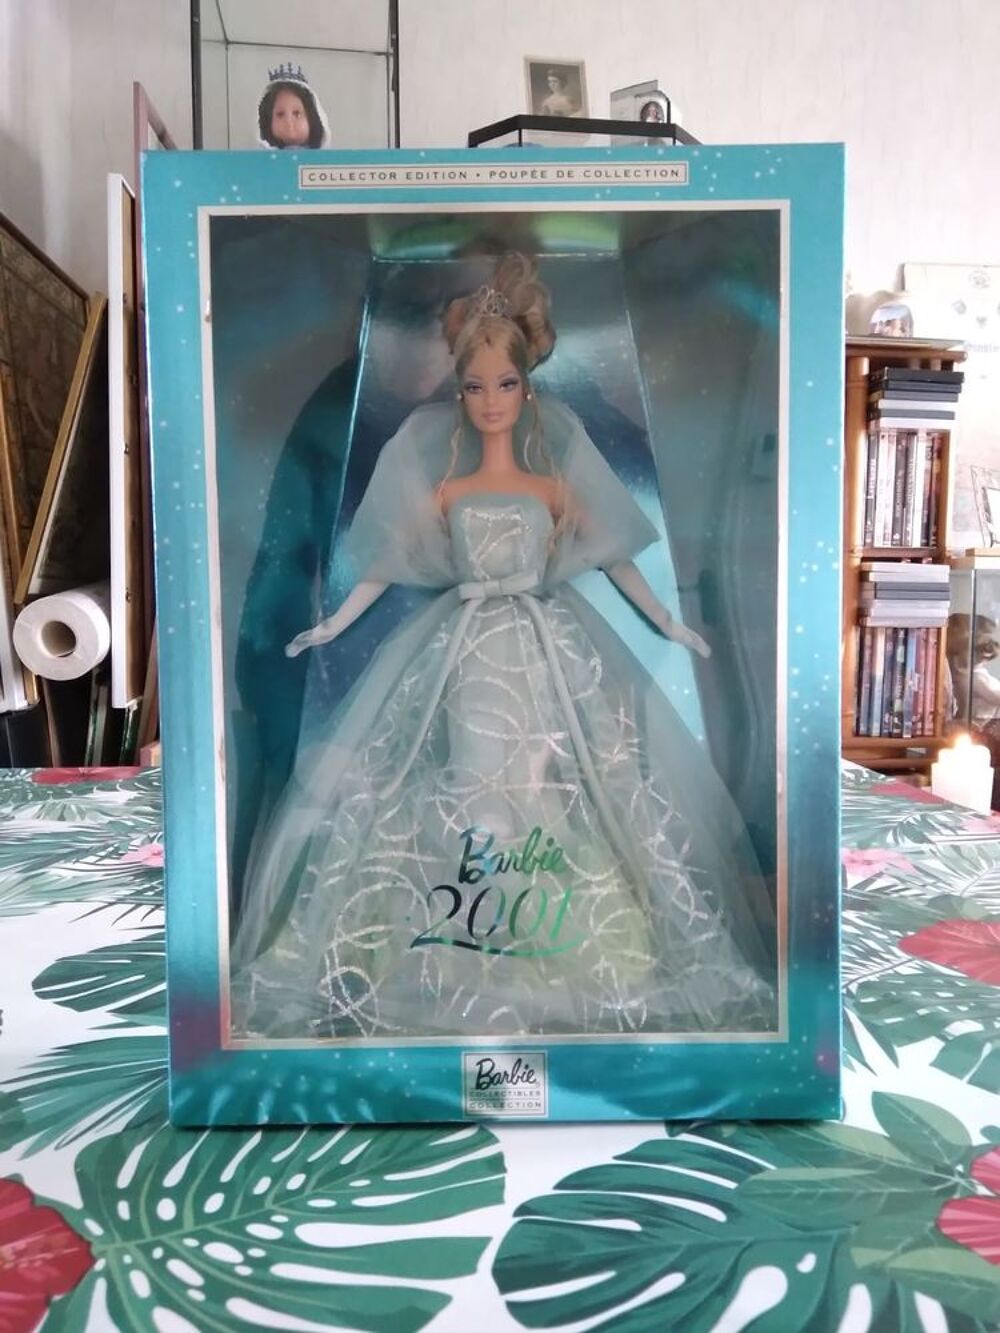 Barbie - Collector edition 2001
Jeux / jouets